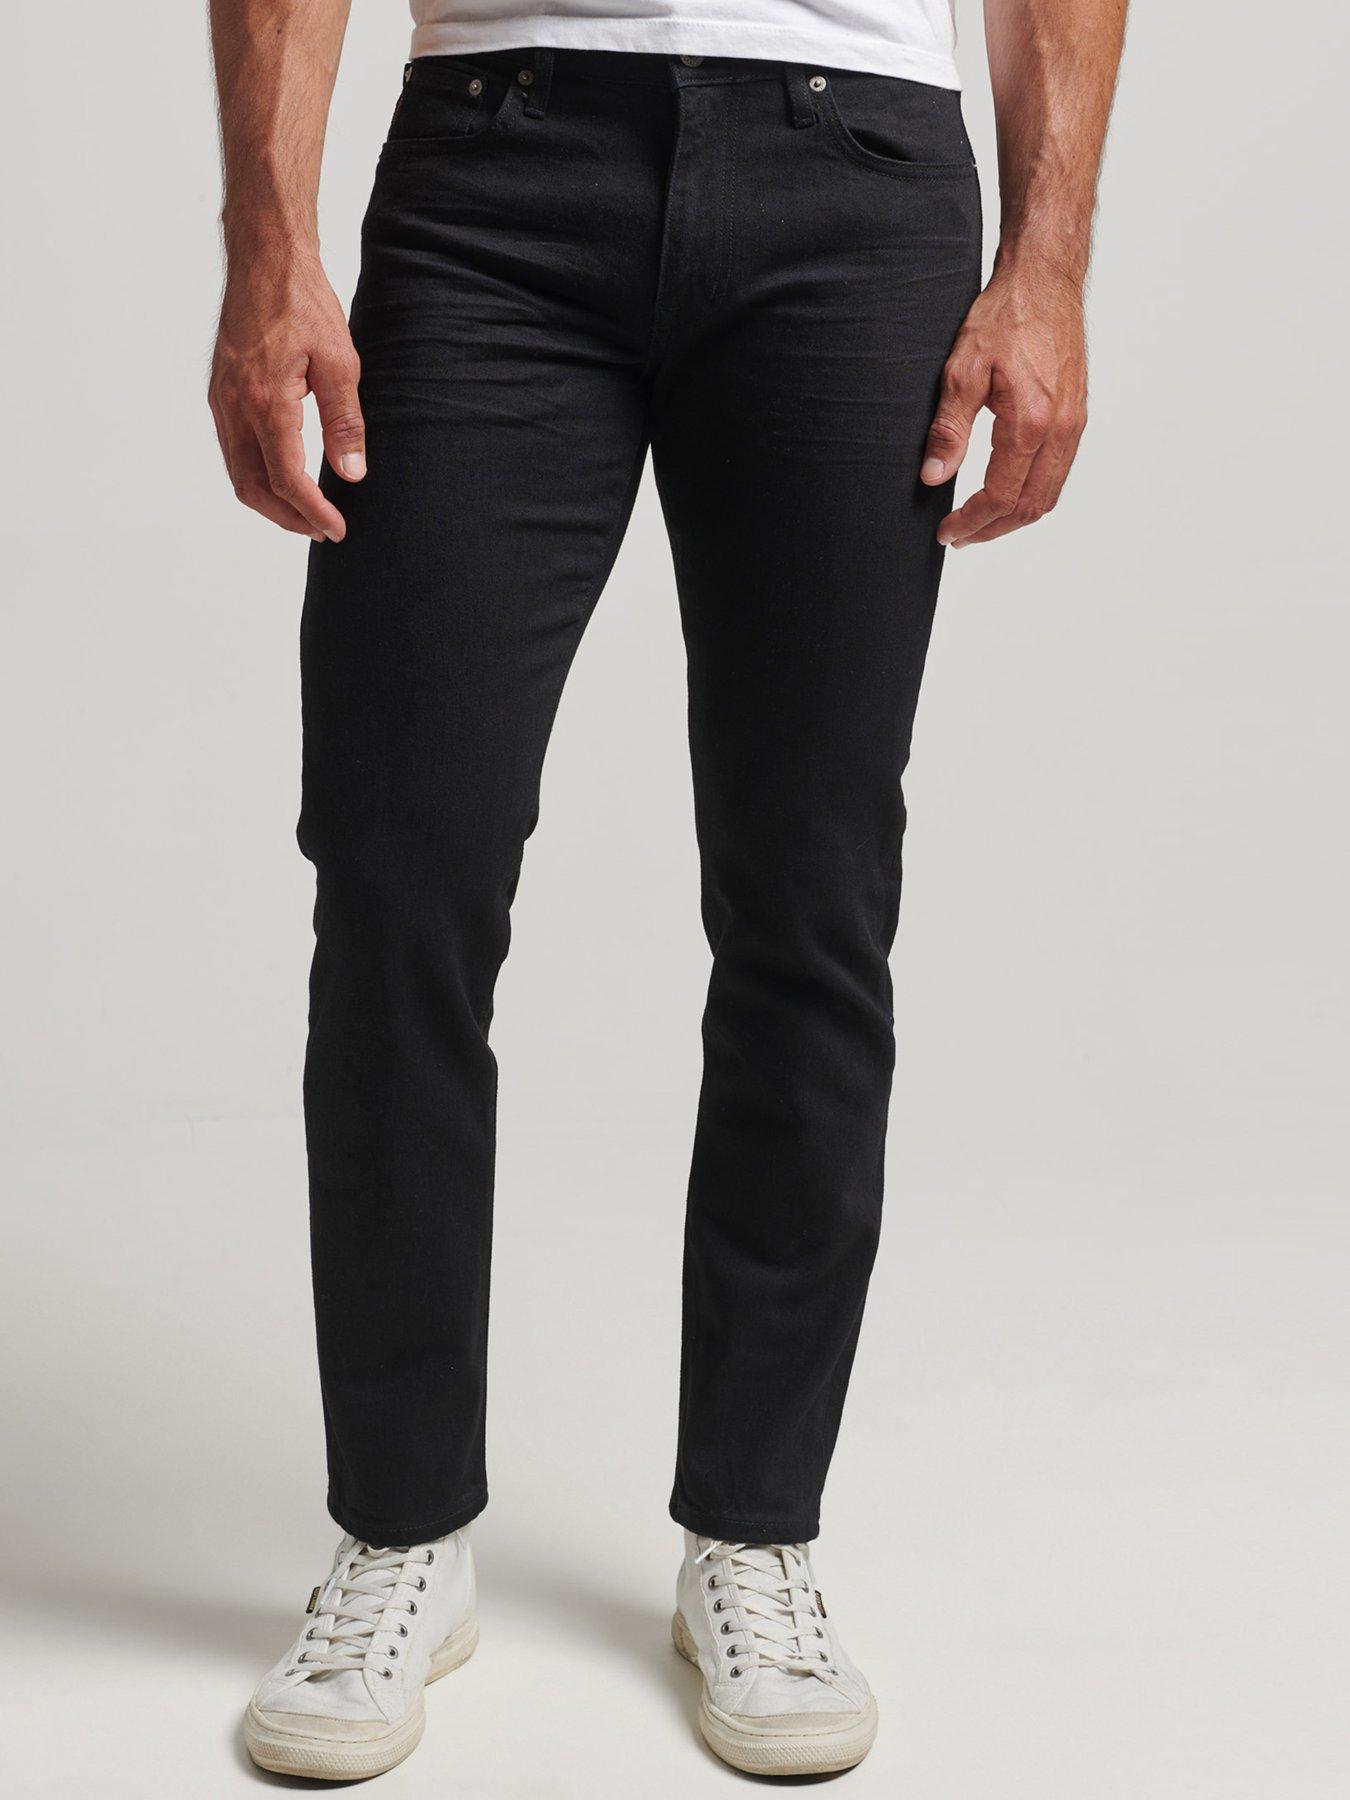 Superdry Cotton Slim Fit Jeans - Black | very.co.uk